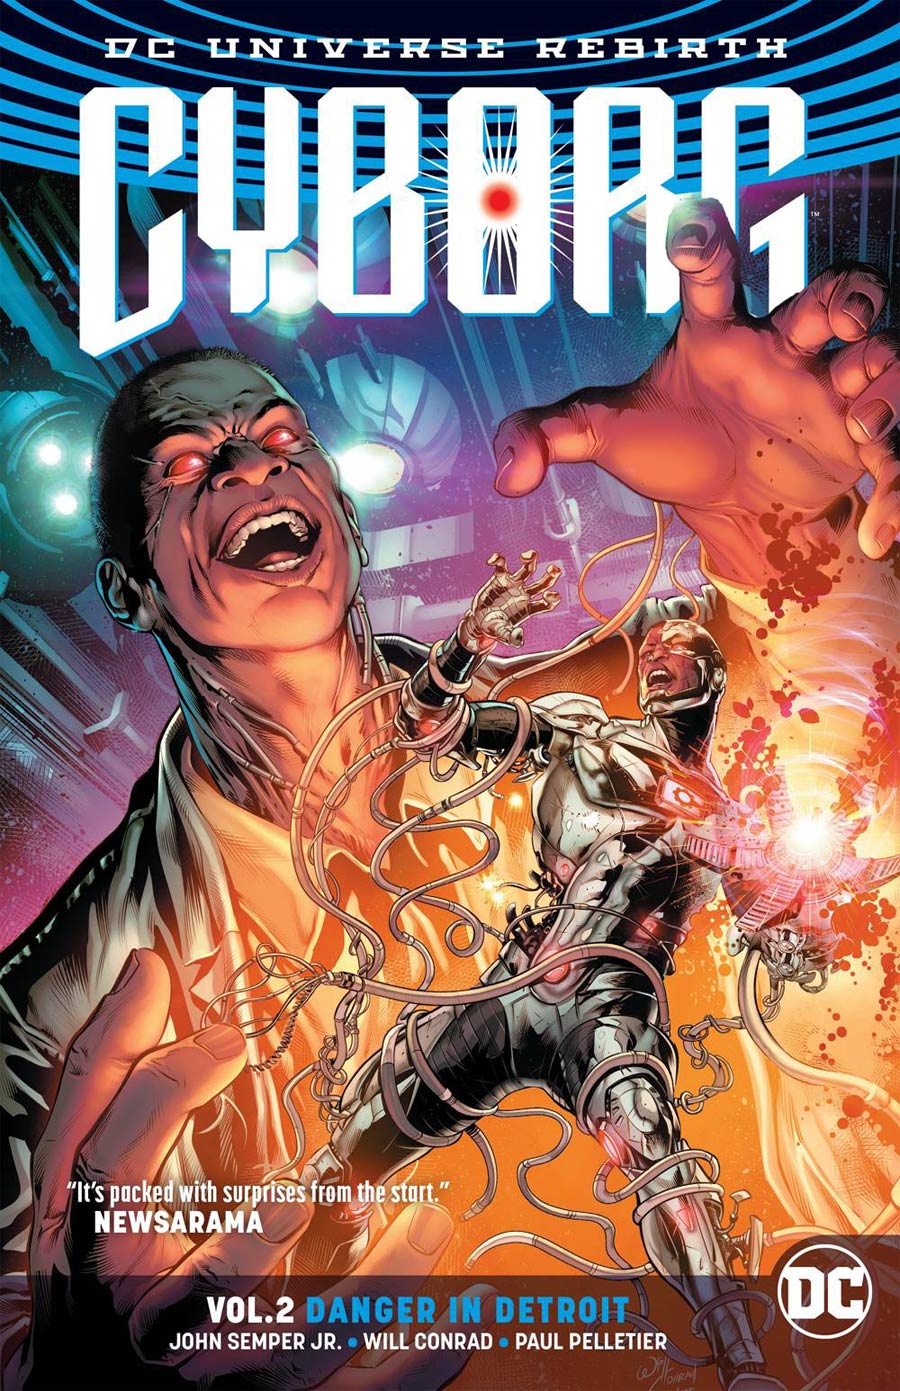 Cyborg (Rebirth) Vol 2 Danger In Detroit TP